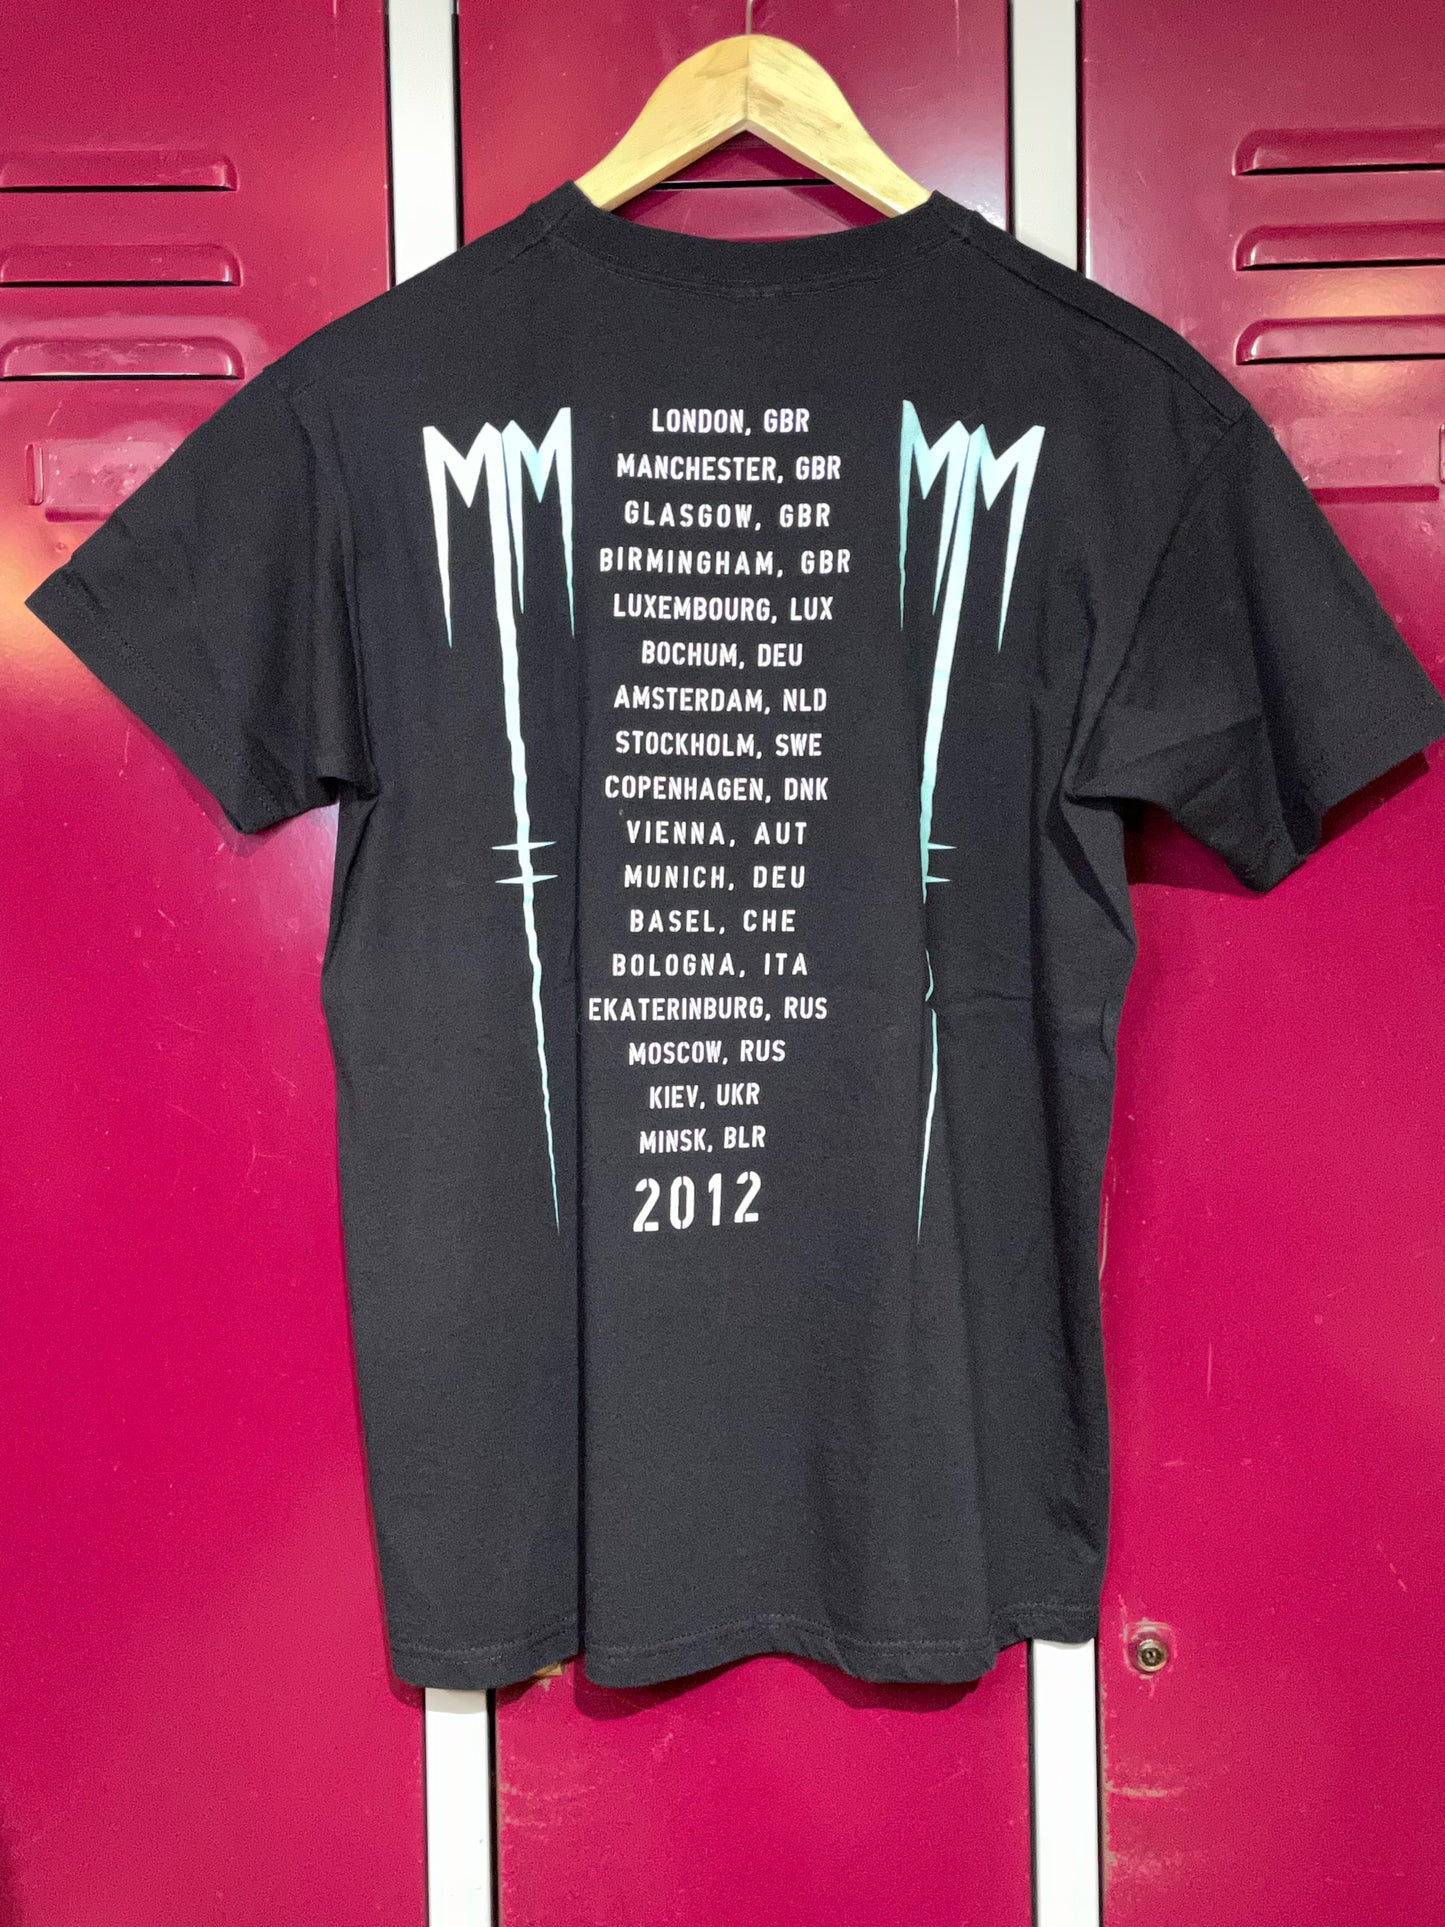 MARILYN MANSON "BORN VILLAIN" TOUR 2012 MUSICBAND T-SHIRT  SZ: M